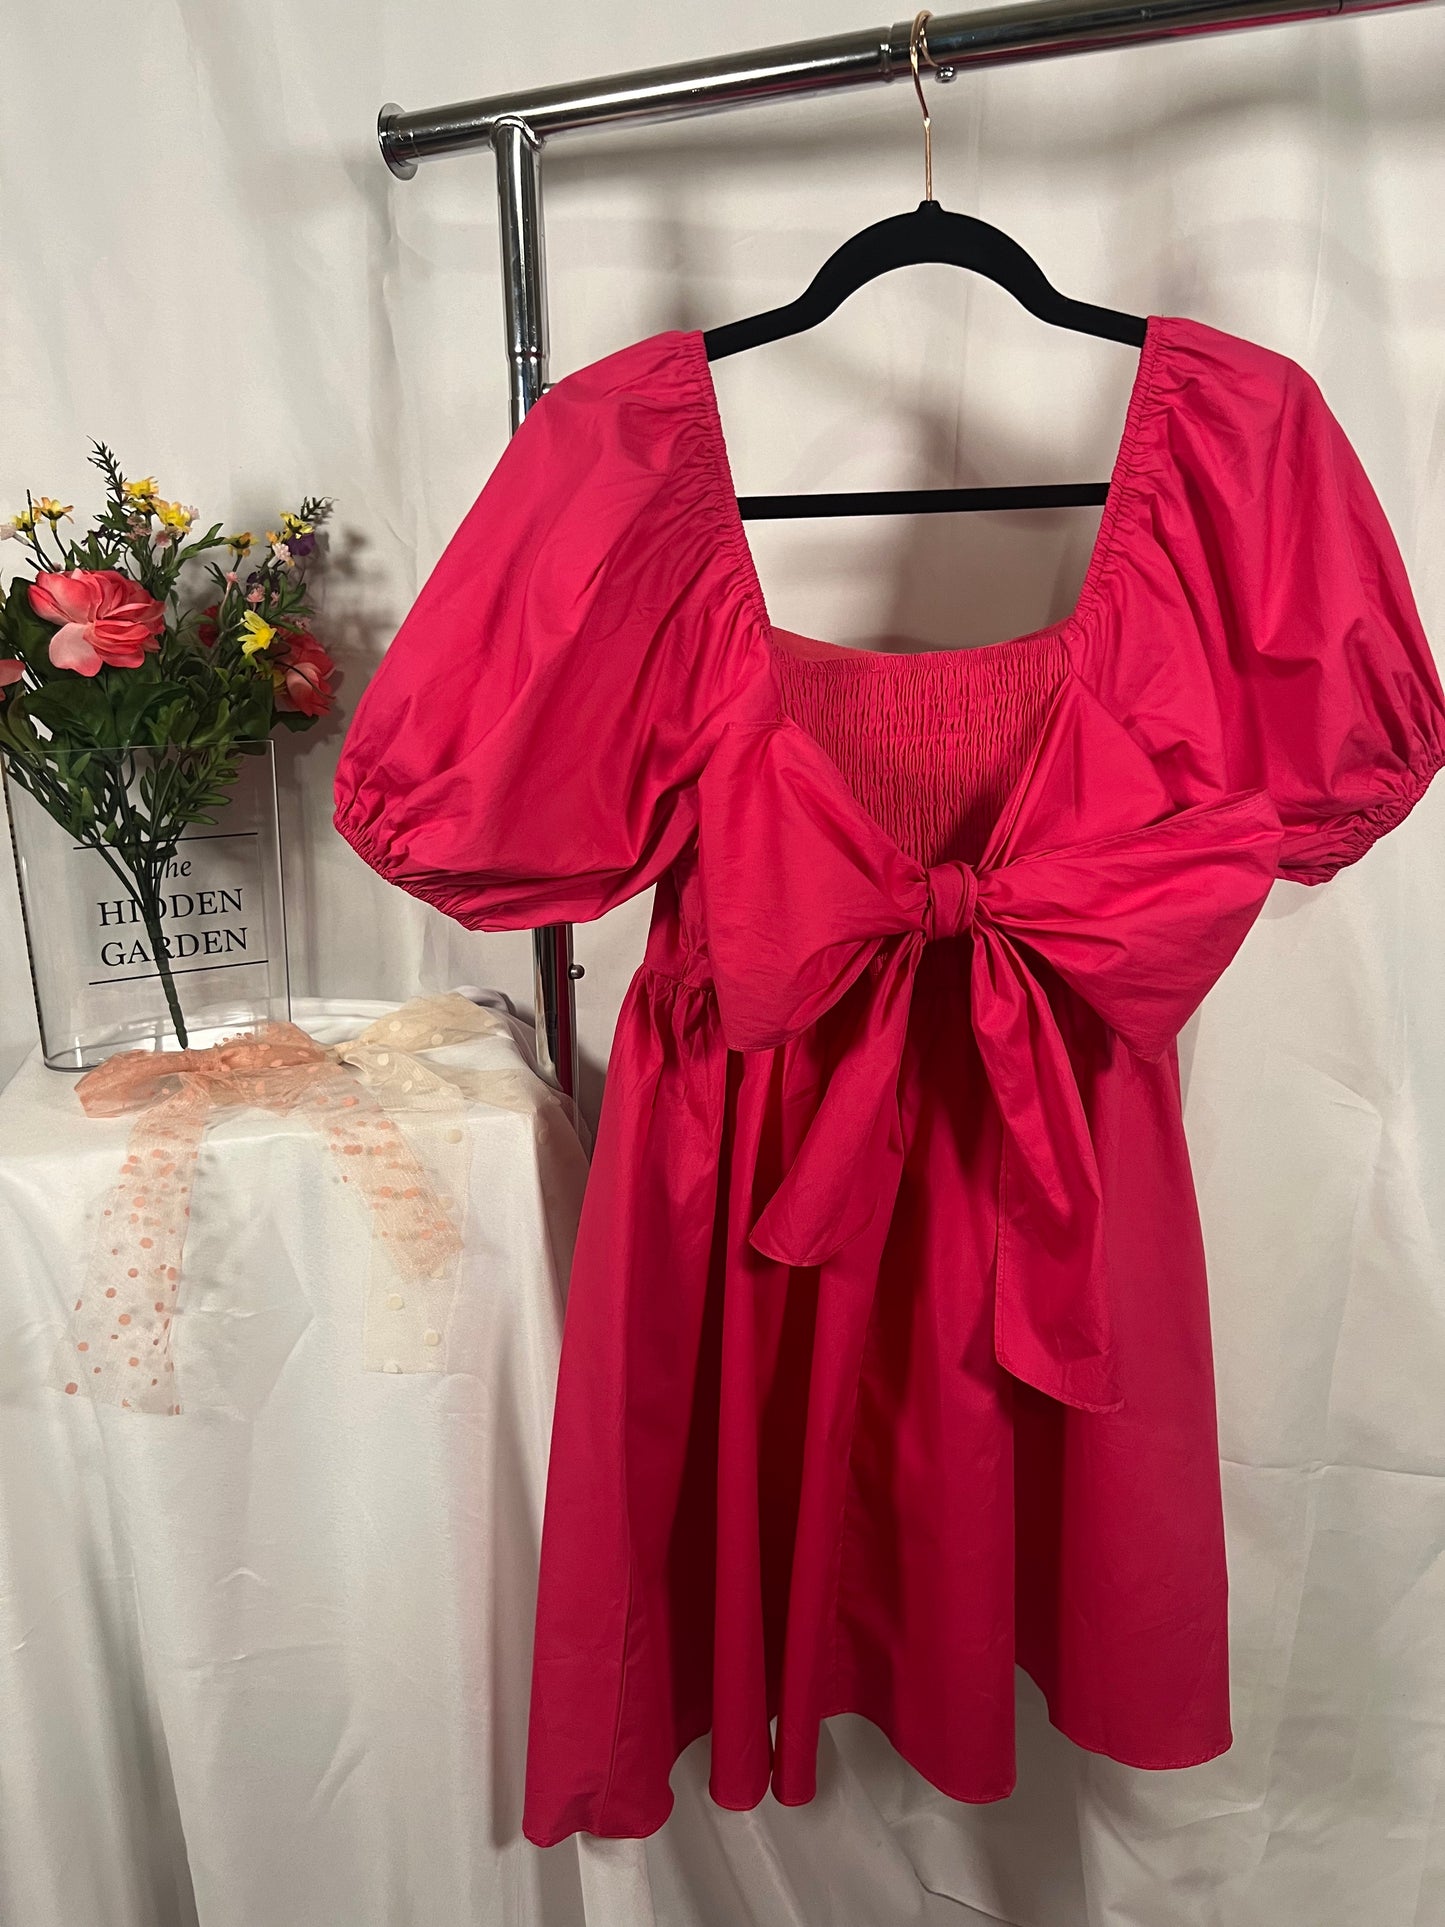 Pink Bow Babydoll Dress